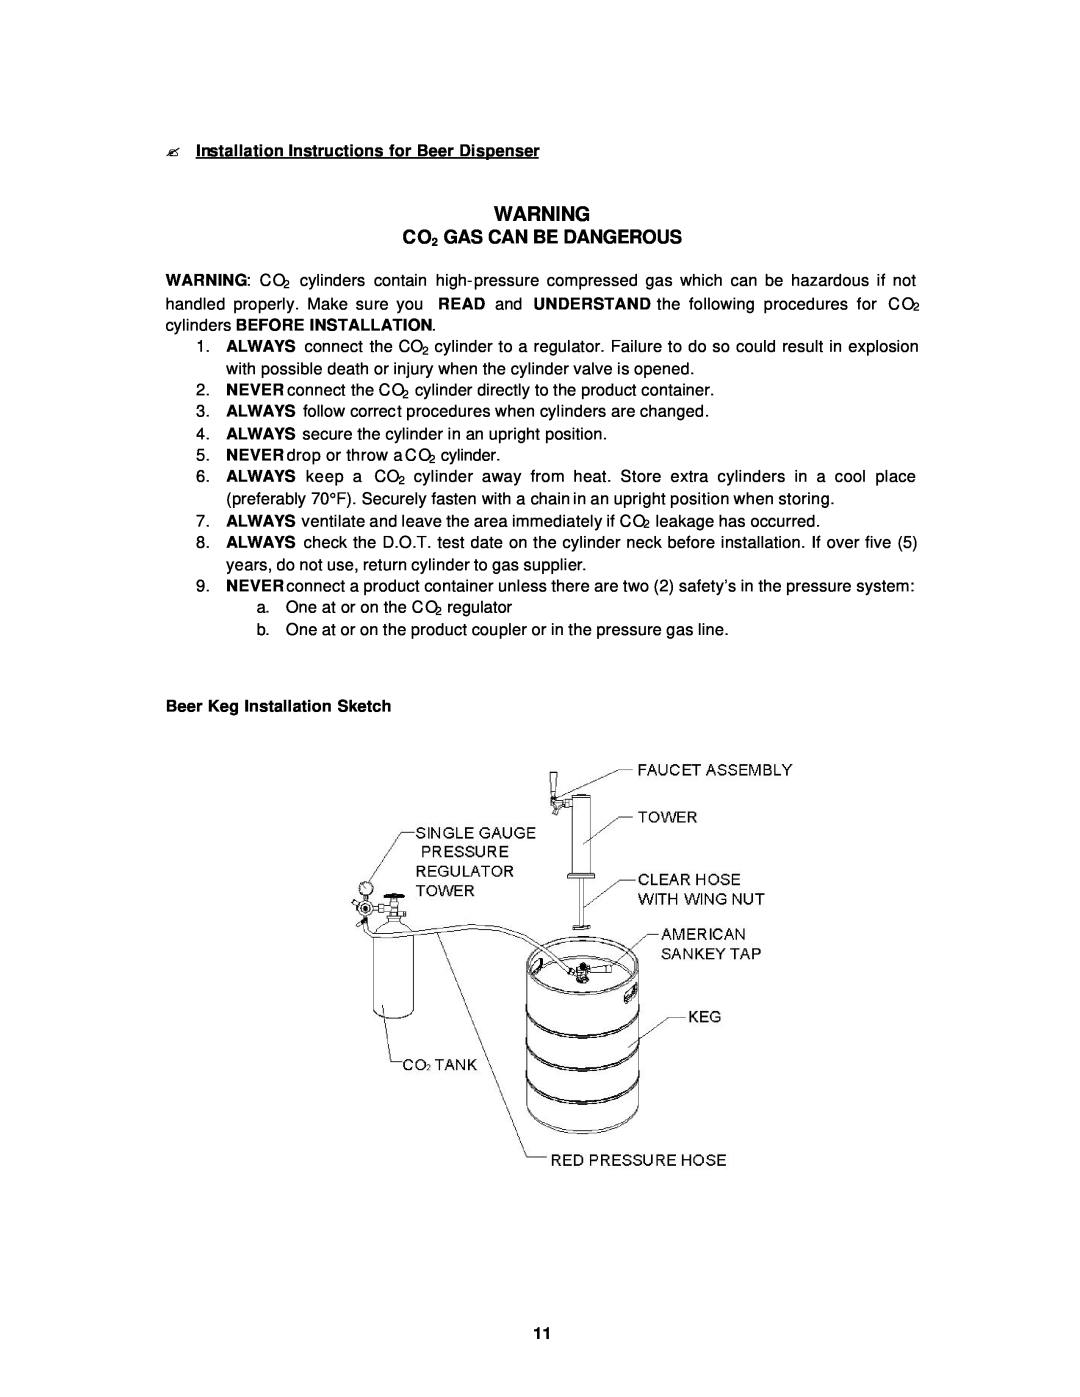 Avanti BD6000 CO2 GAS CAN BE DANGEROUS, ?Installation Instructions for Beer Dispenser, Beer Keg Installation Sketch 